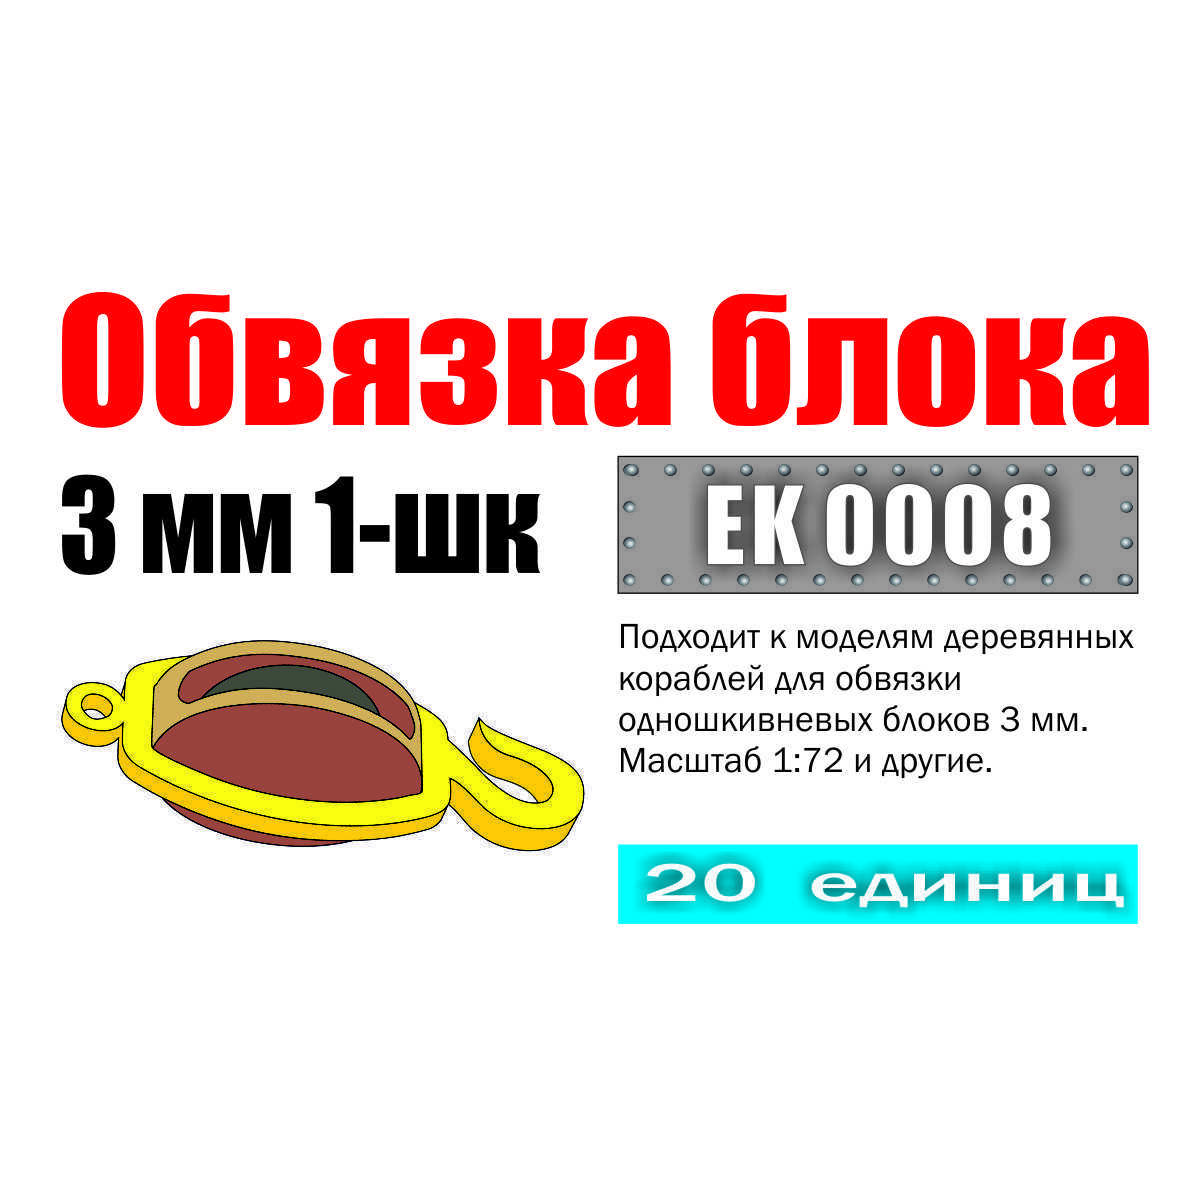 EK0008 Эскадра Обвязка блока 3 мм 1-шк (20 шт.)